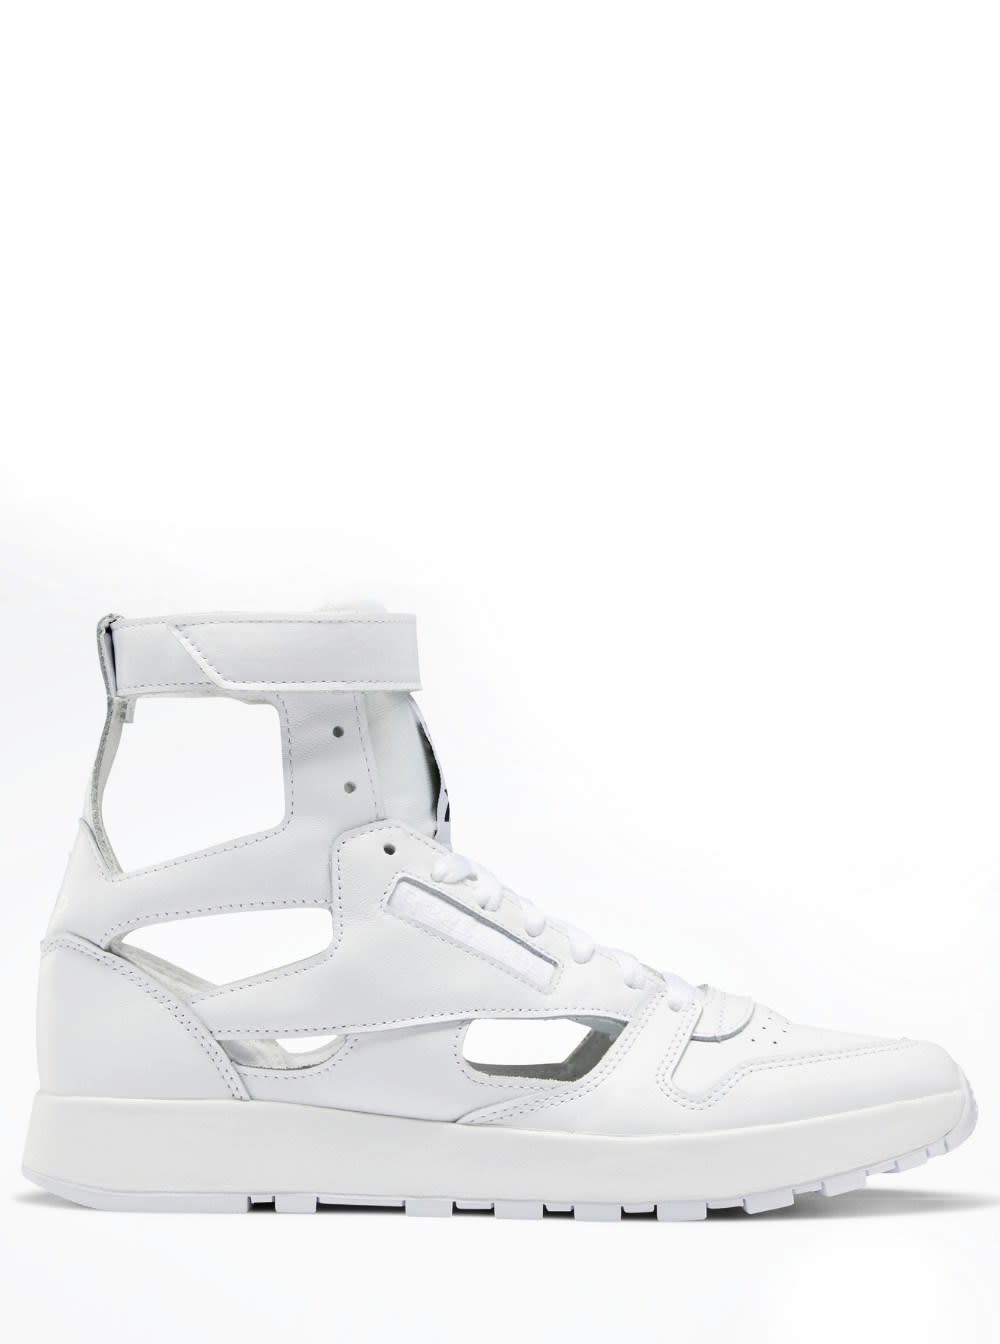 Maison Margiela Mm X Reebok Classic Tabi Sneakers In White Leather